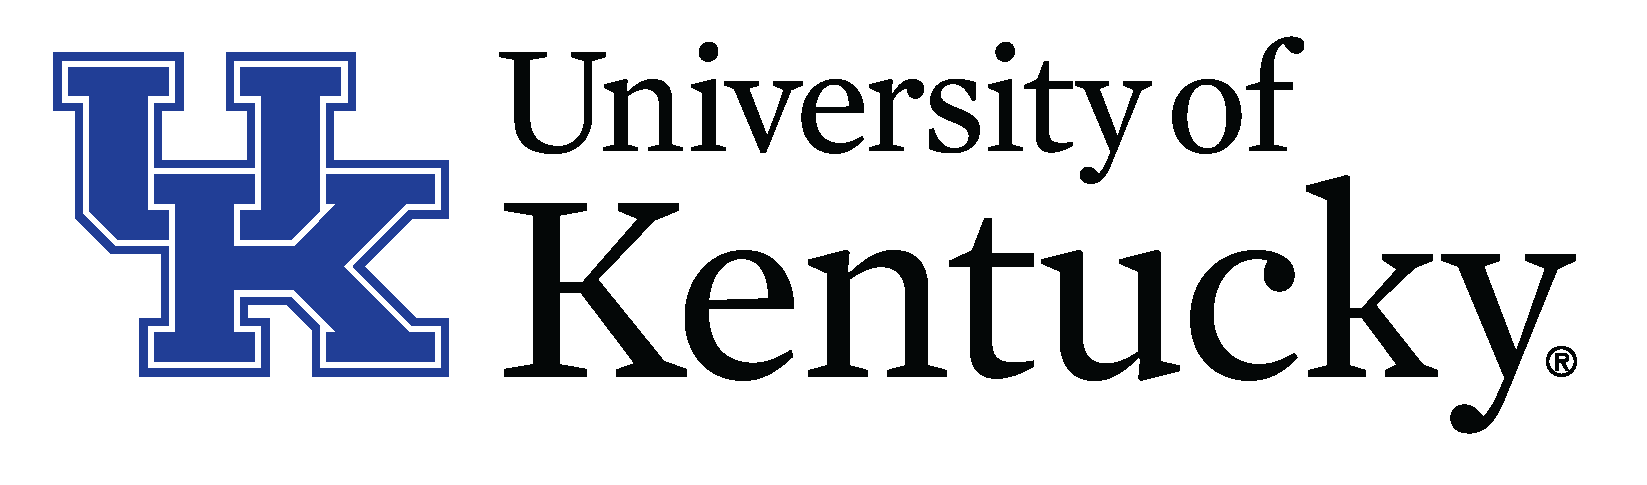 Logo of The University of Kentucky